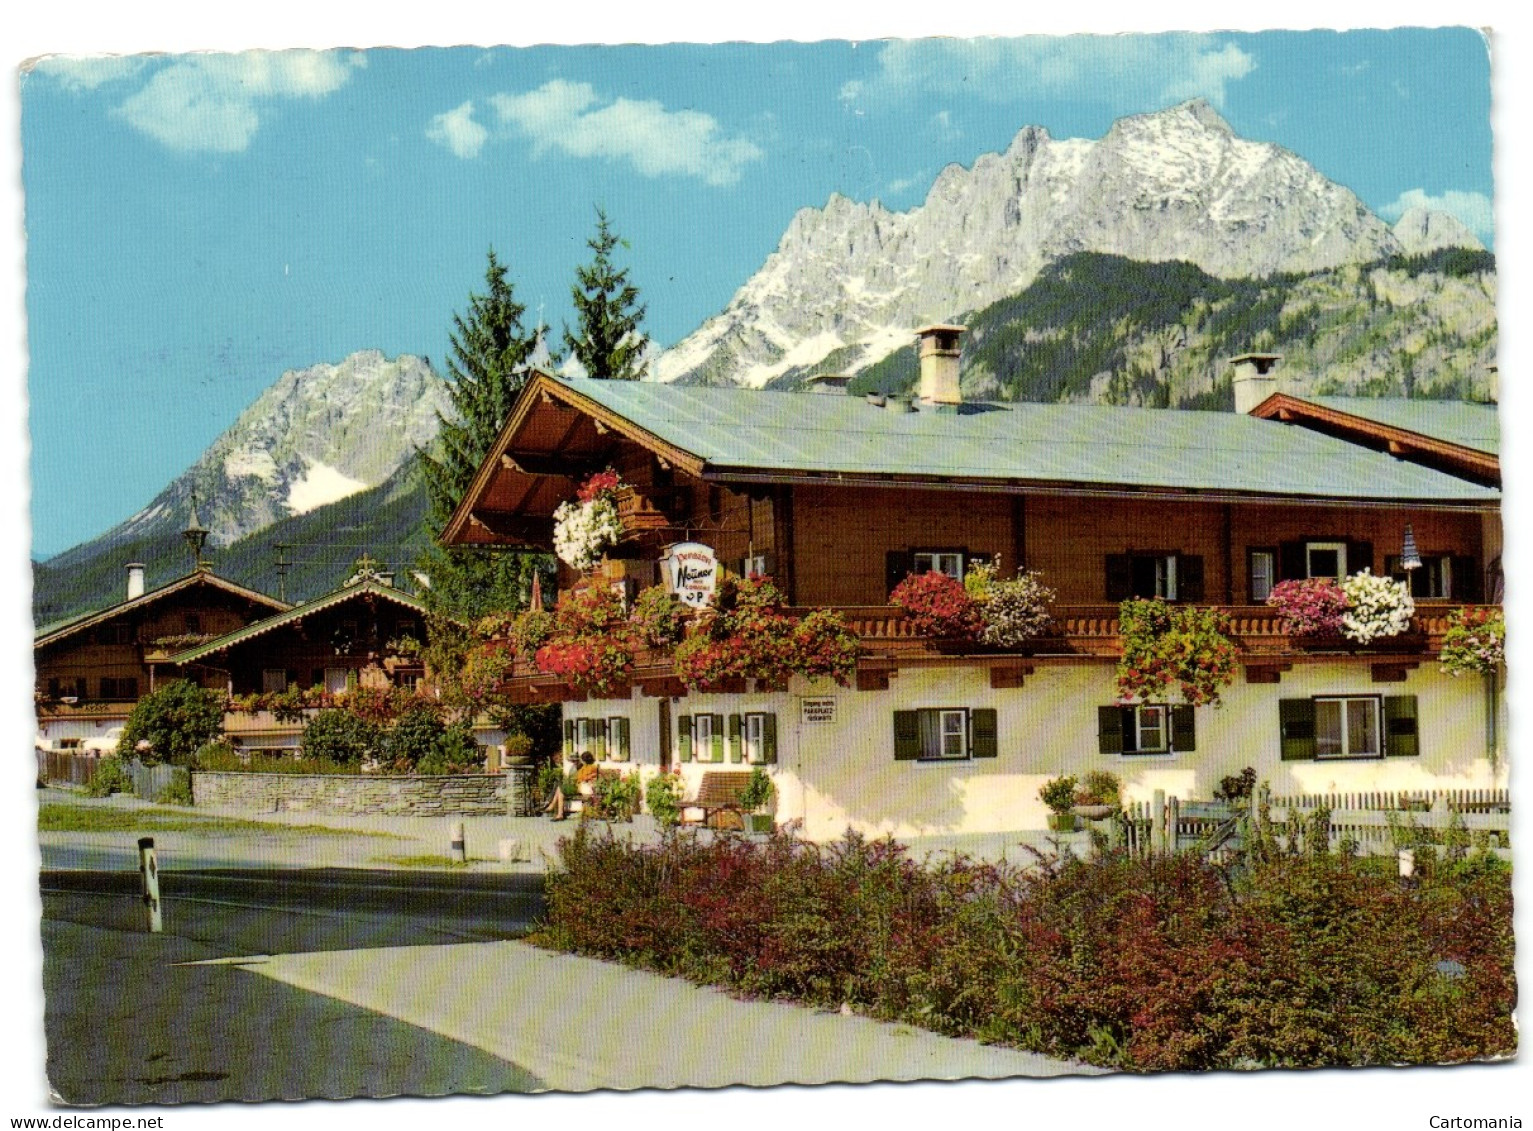 St. Johann In Tirol Mit Kaisergebirge - St. Johann In Tirol